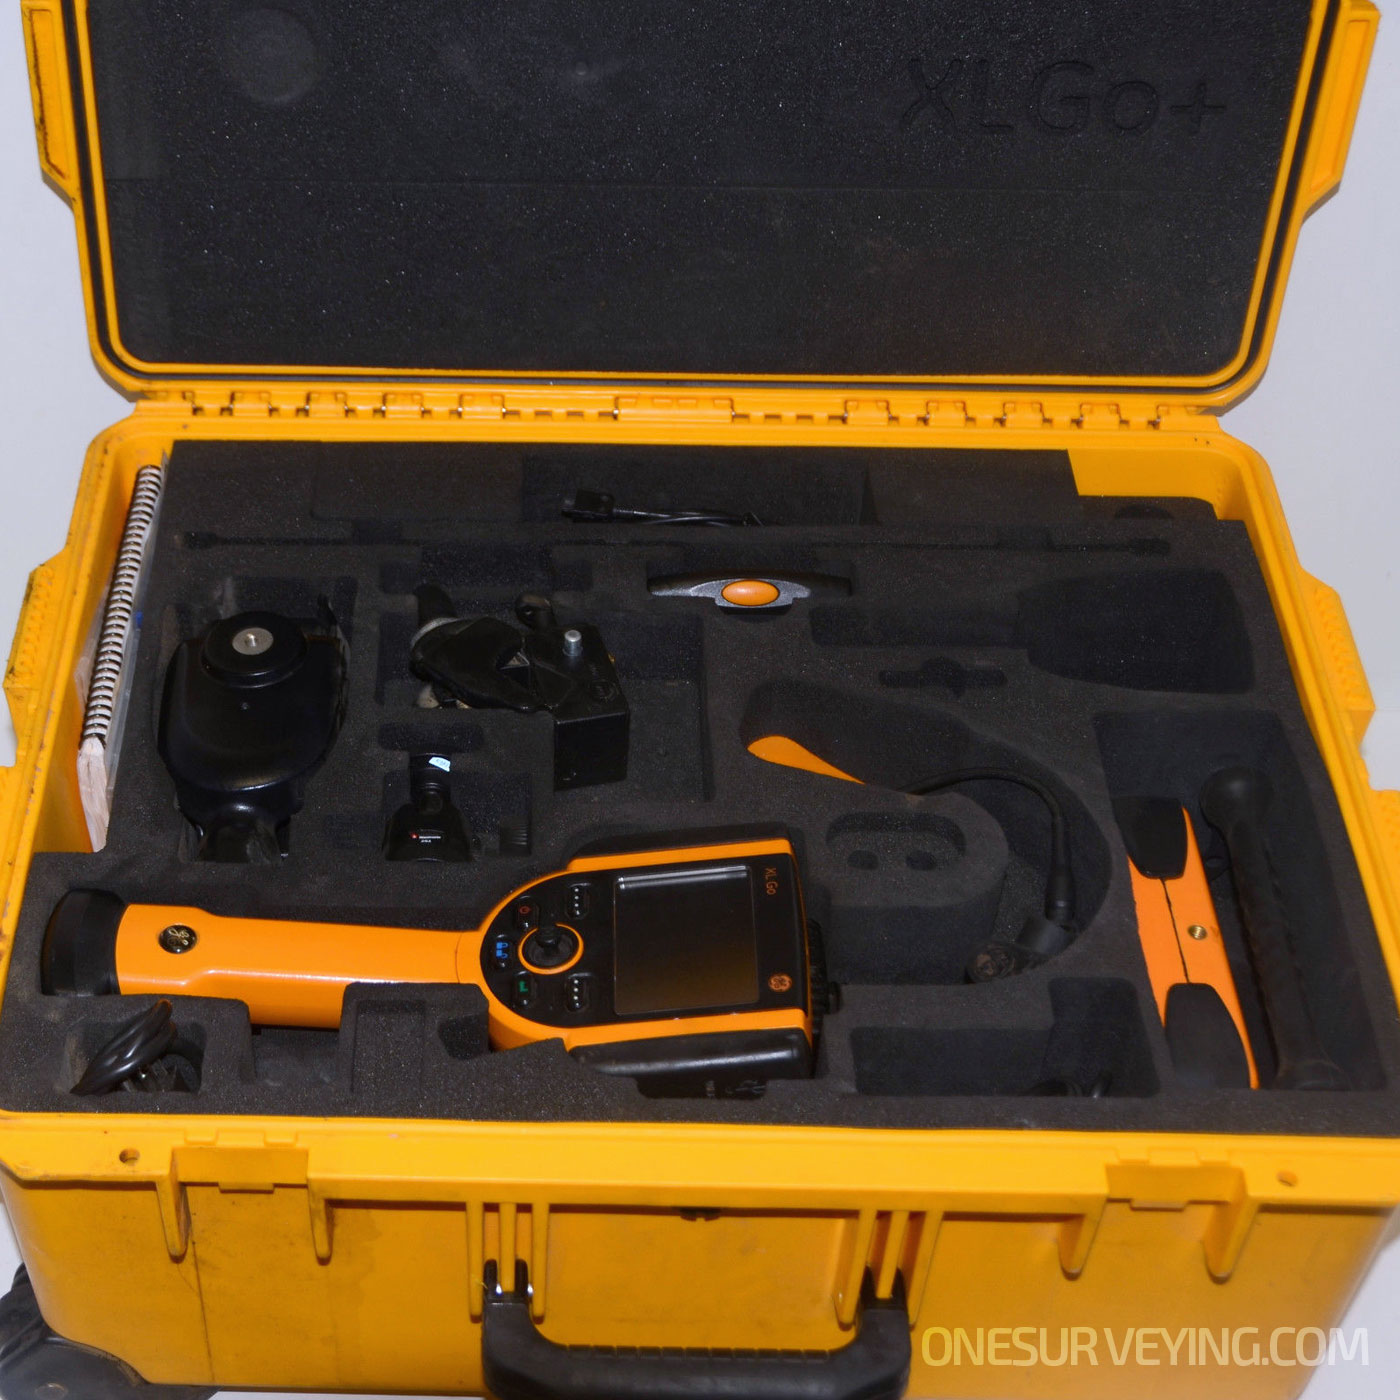 GE-XL-GO-Borescope-Inspection-Camera-NDT-2m-5mm-Price.jpg